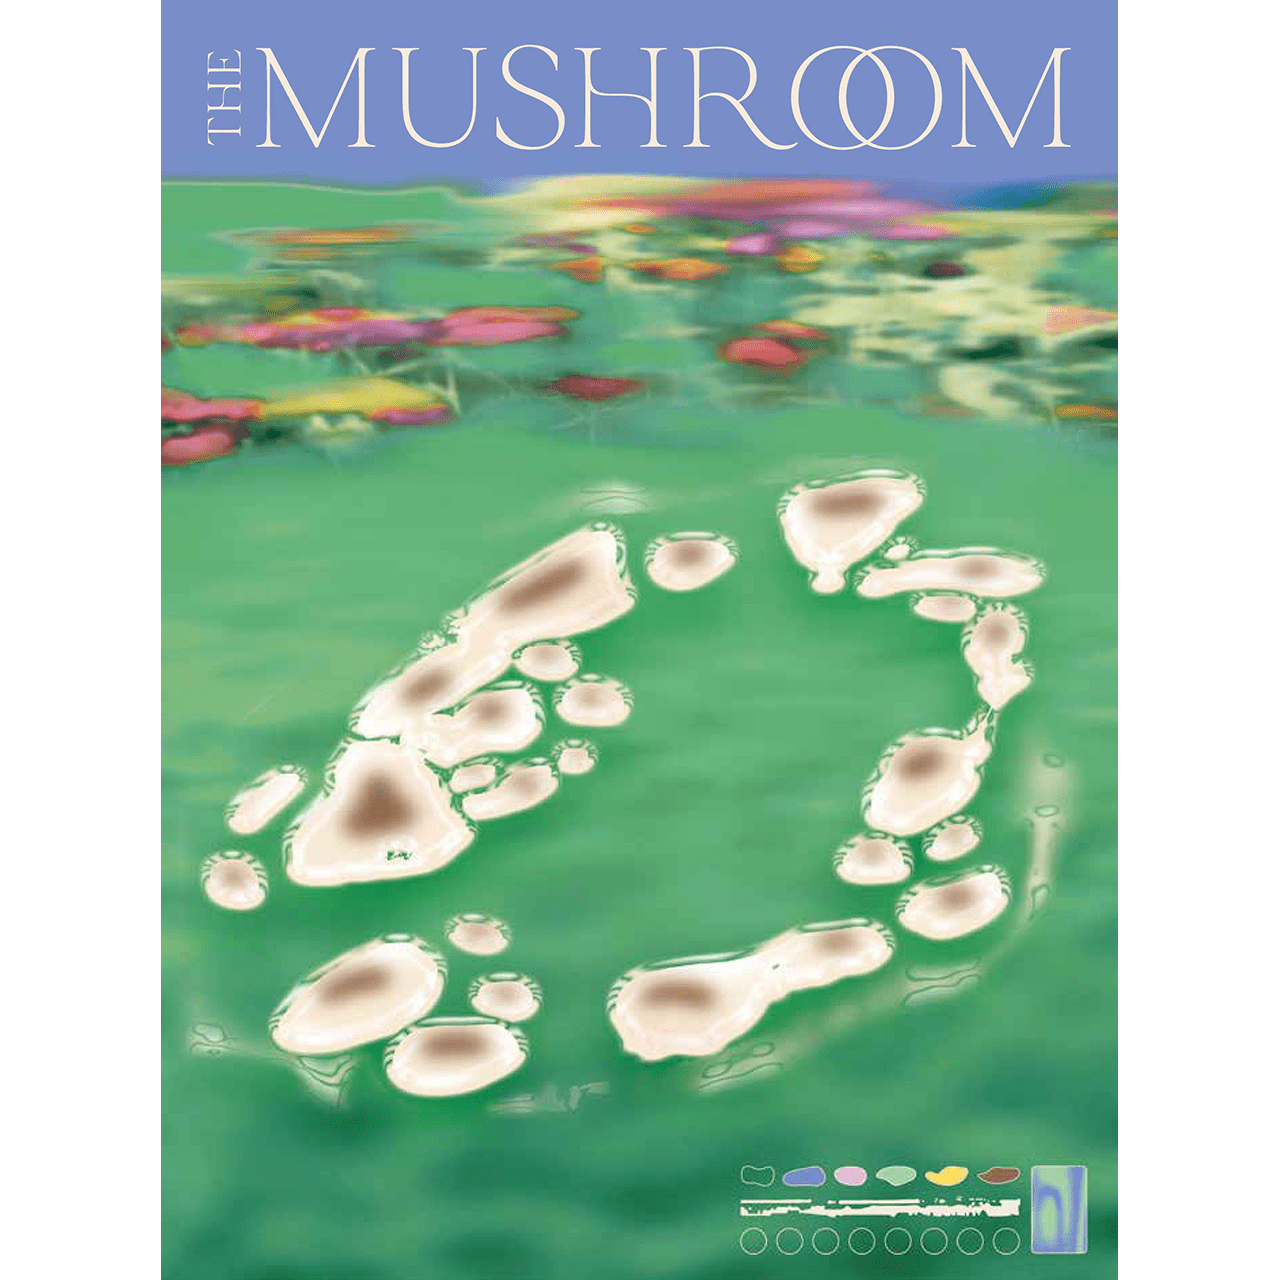 The Mushroom Magazine - Issue 2